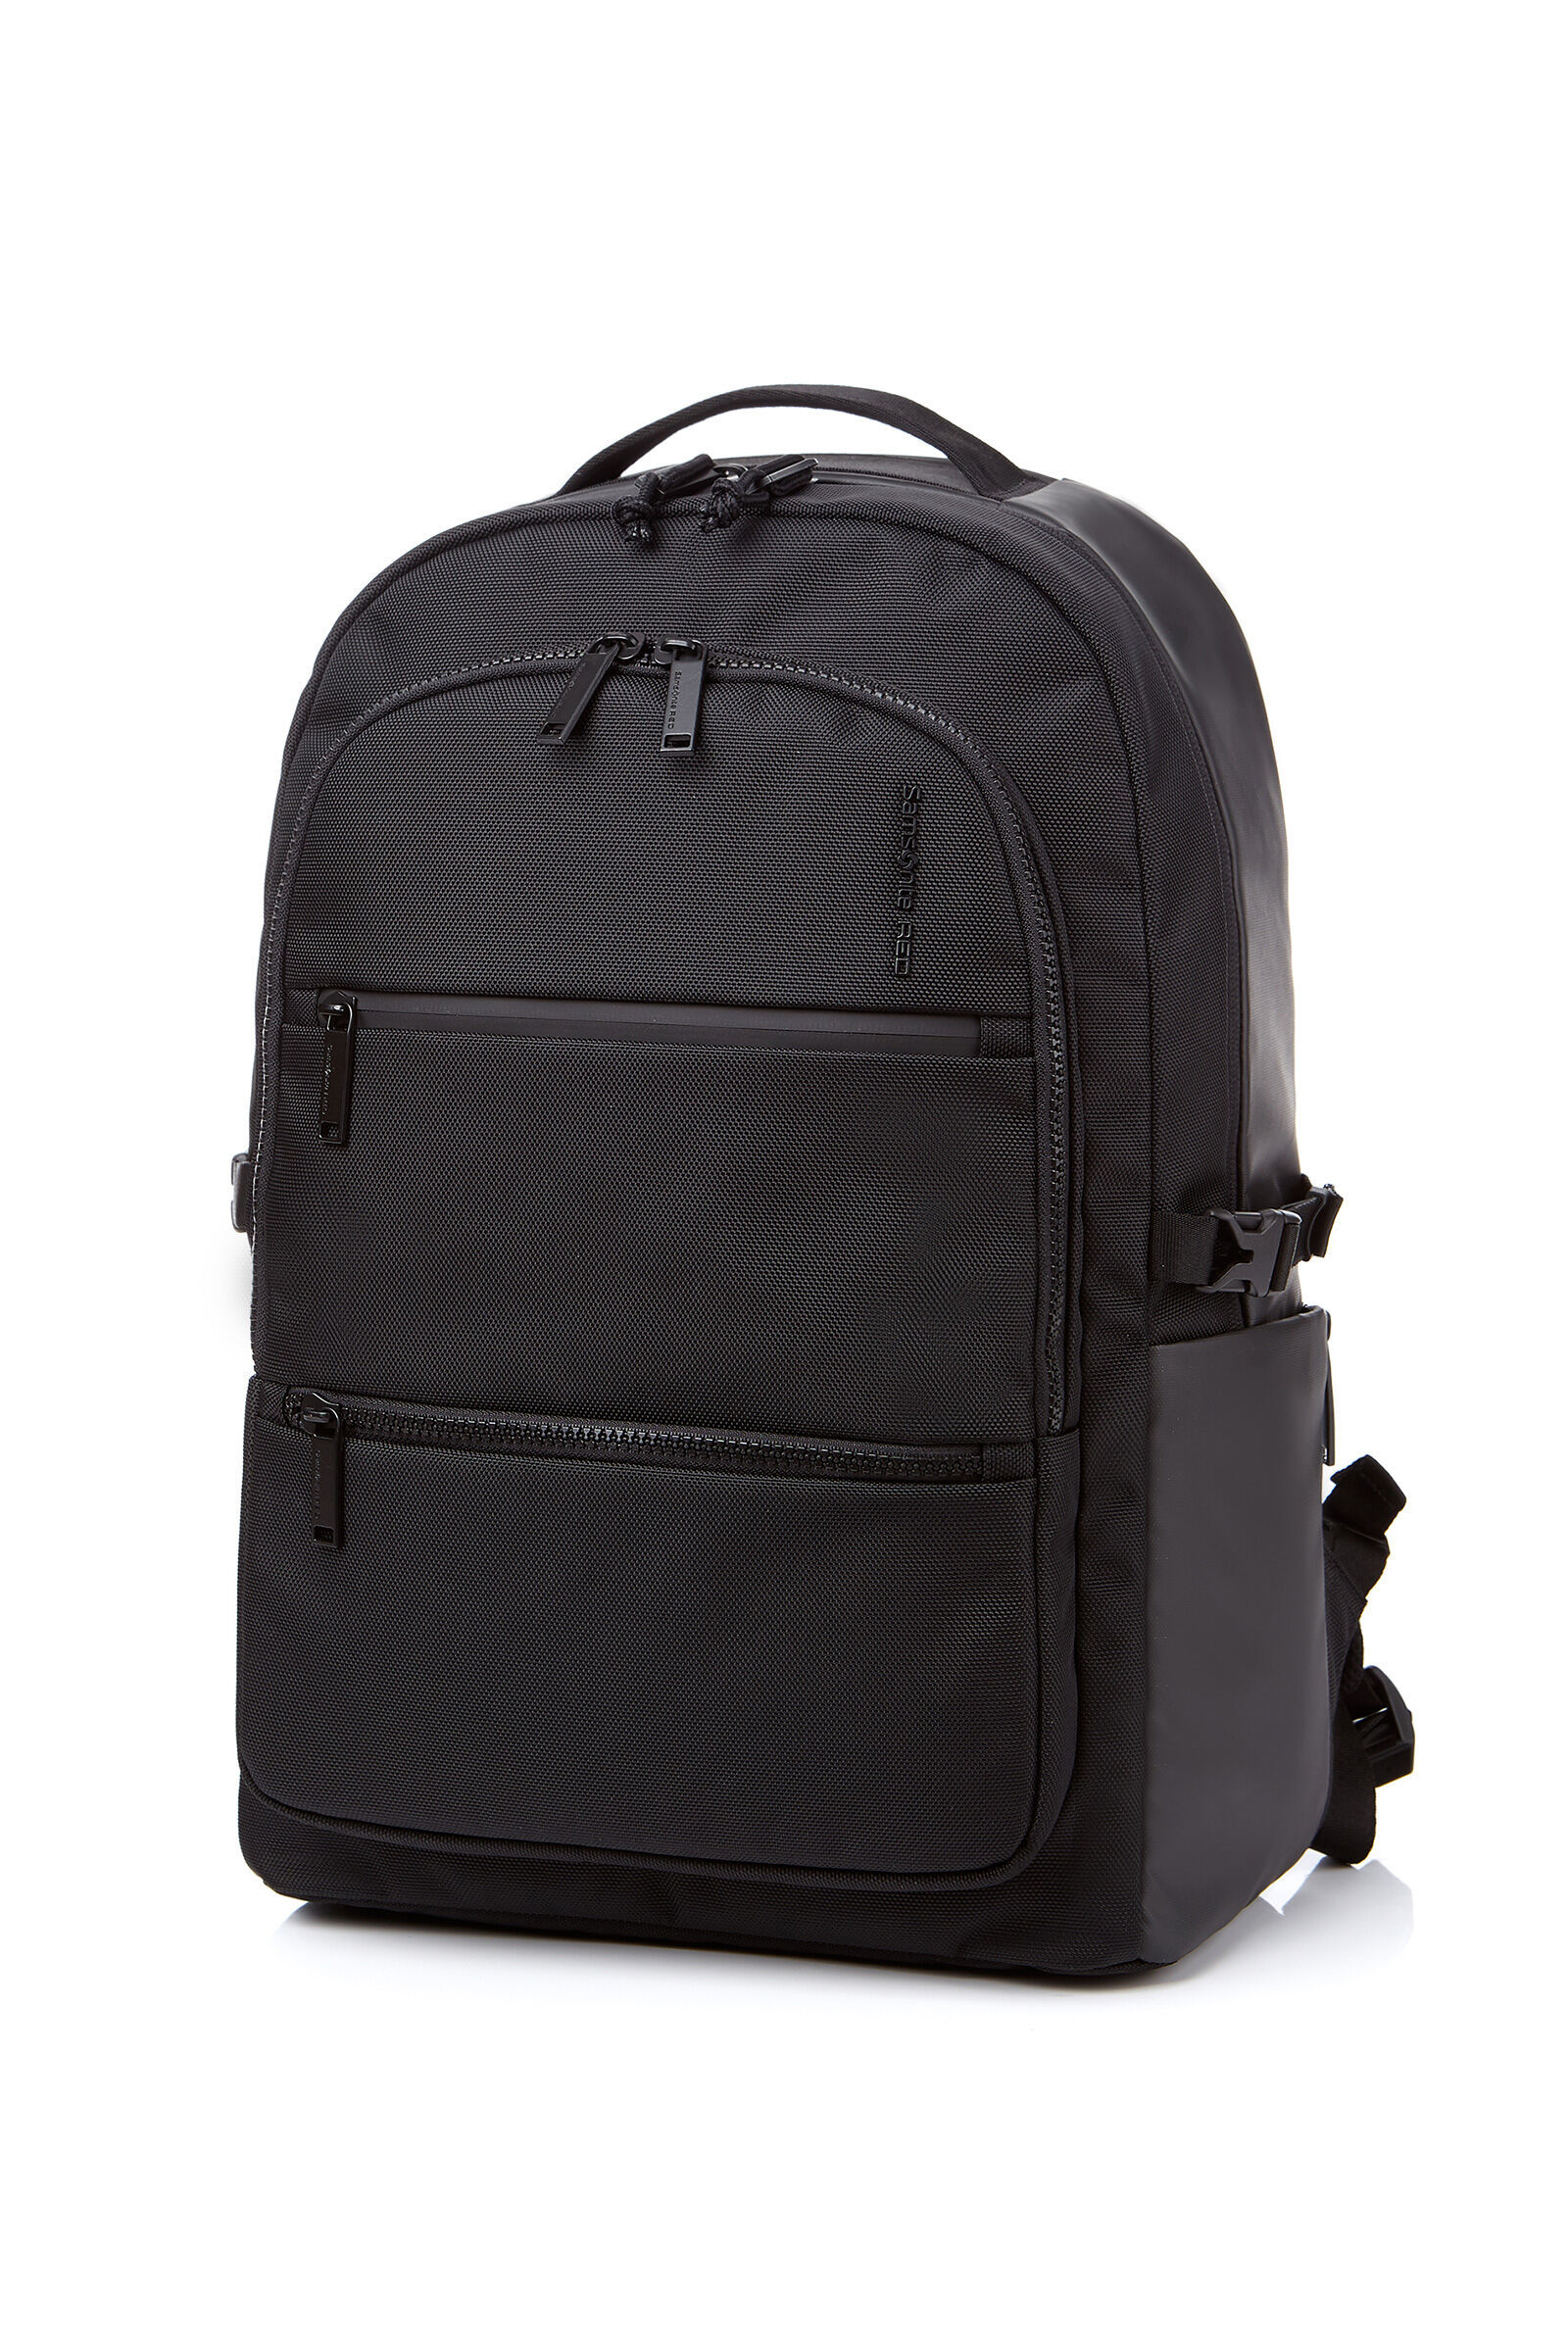 Samsonite Guardit 2.0 15.6 Inch 2-Wheel Laptop Backpack | Go Places